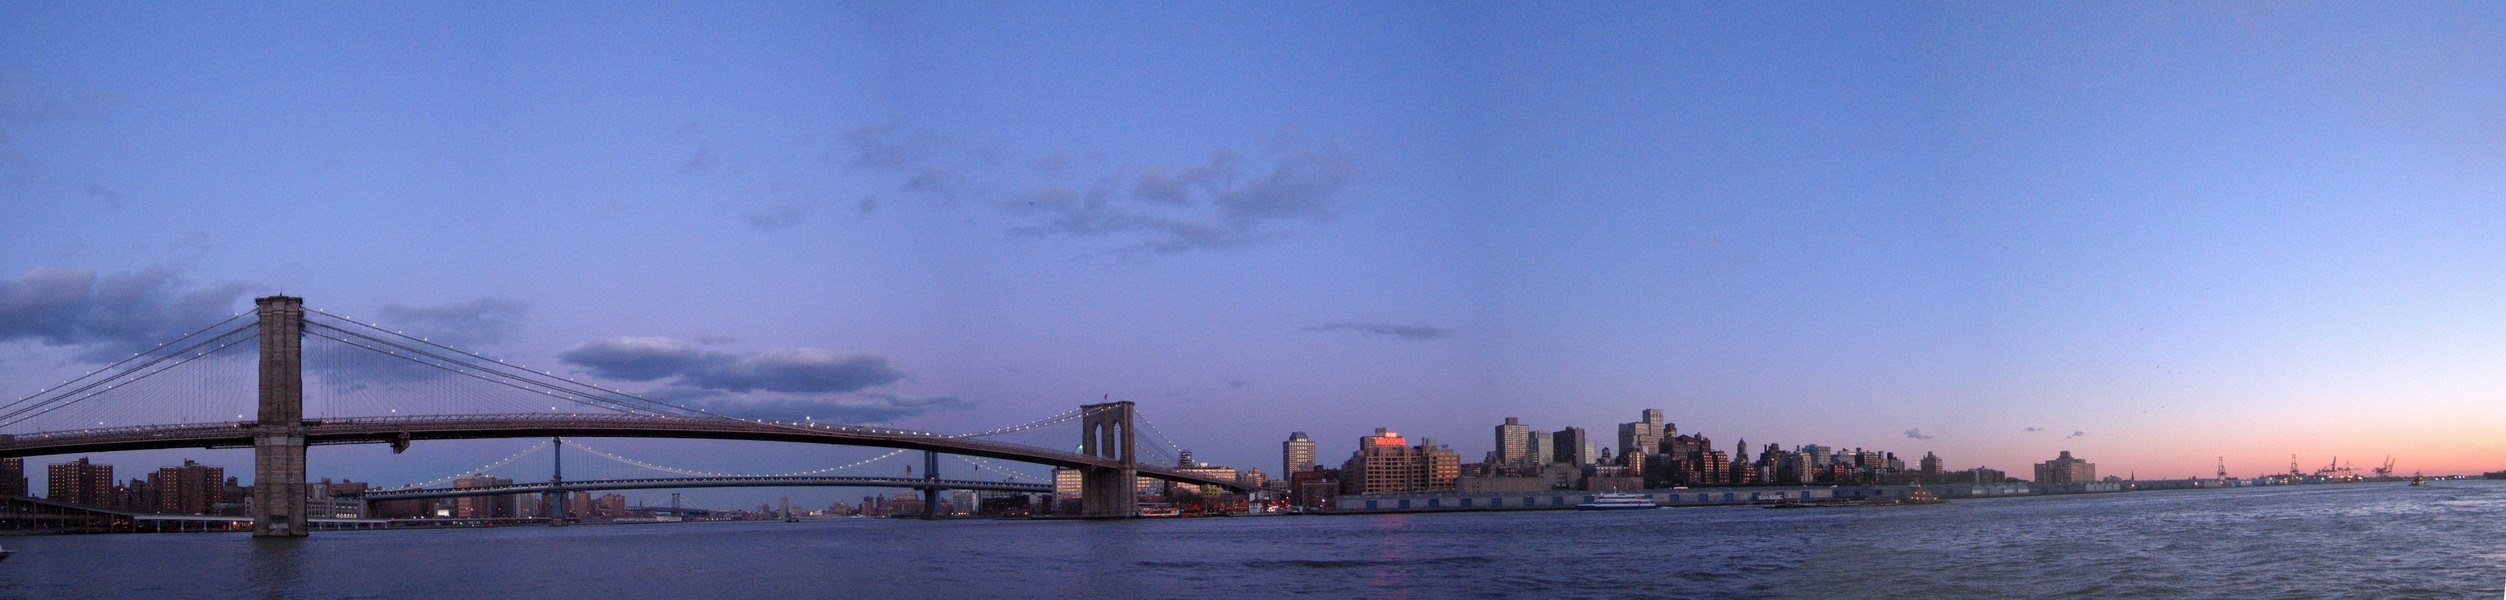 Brooklyn Bridge - the bridge to Brooklyn